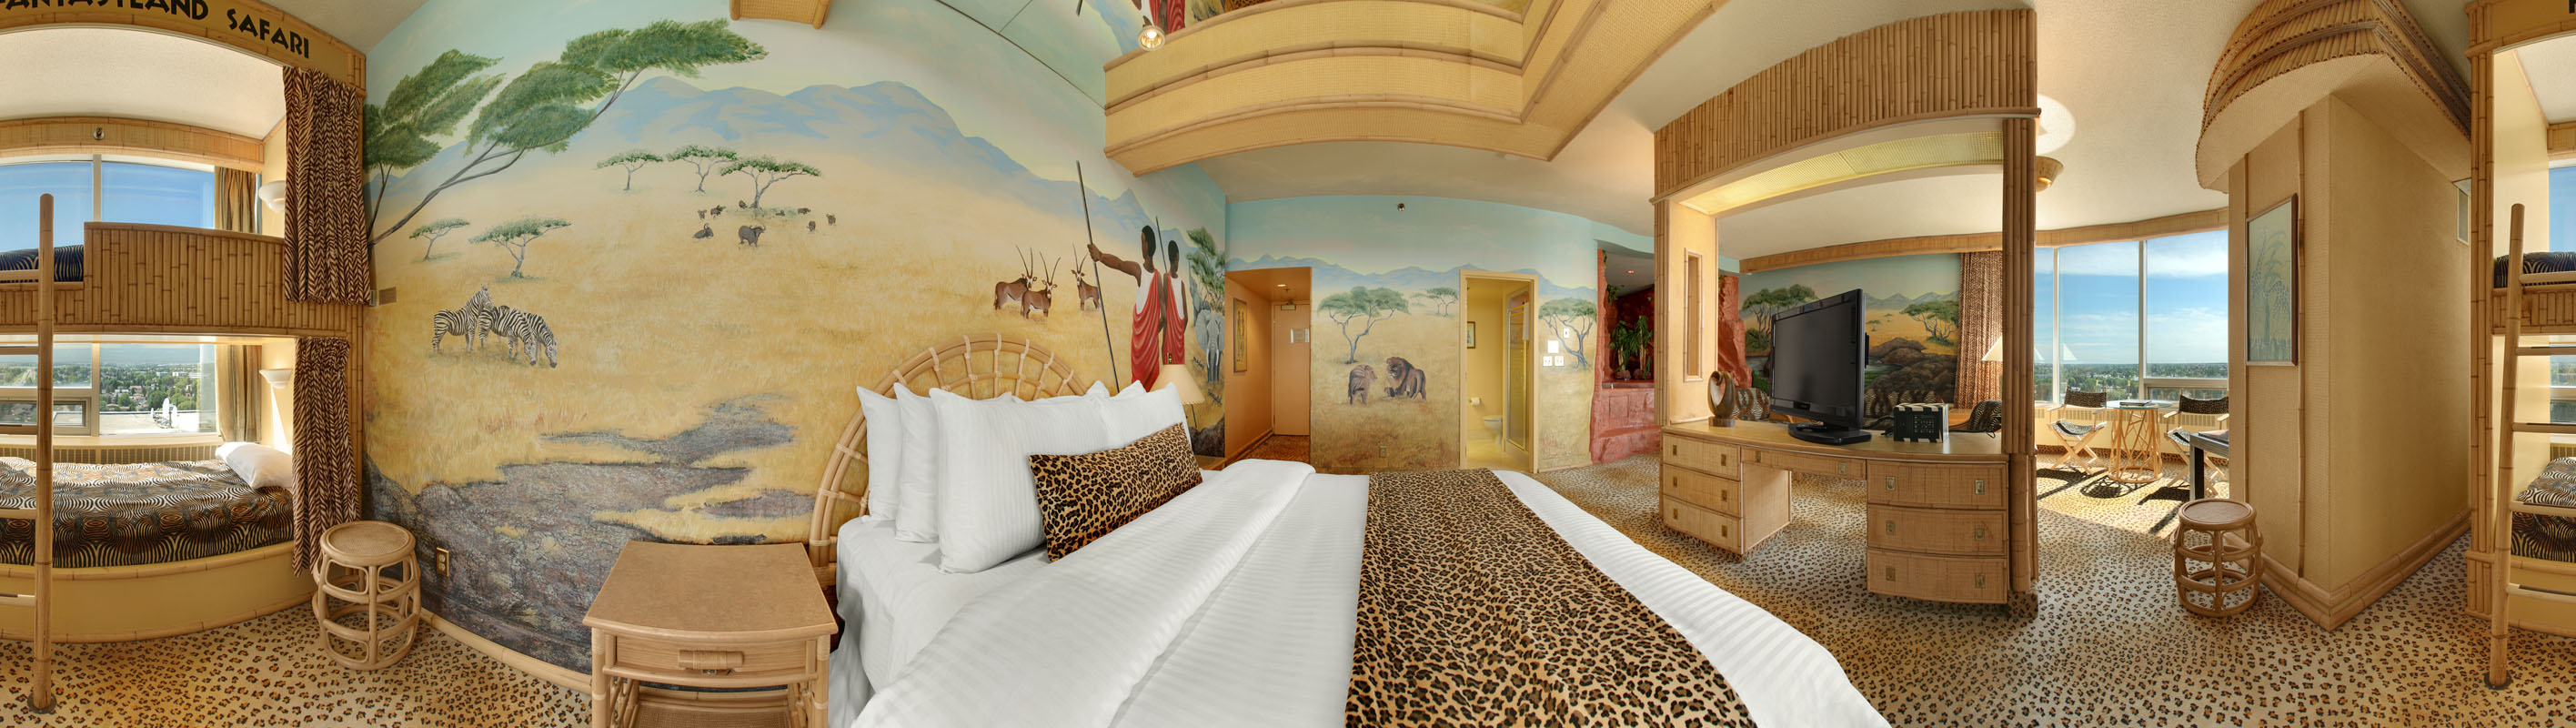 Luxury African Theme Room